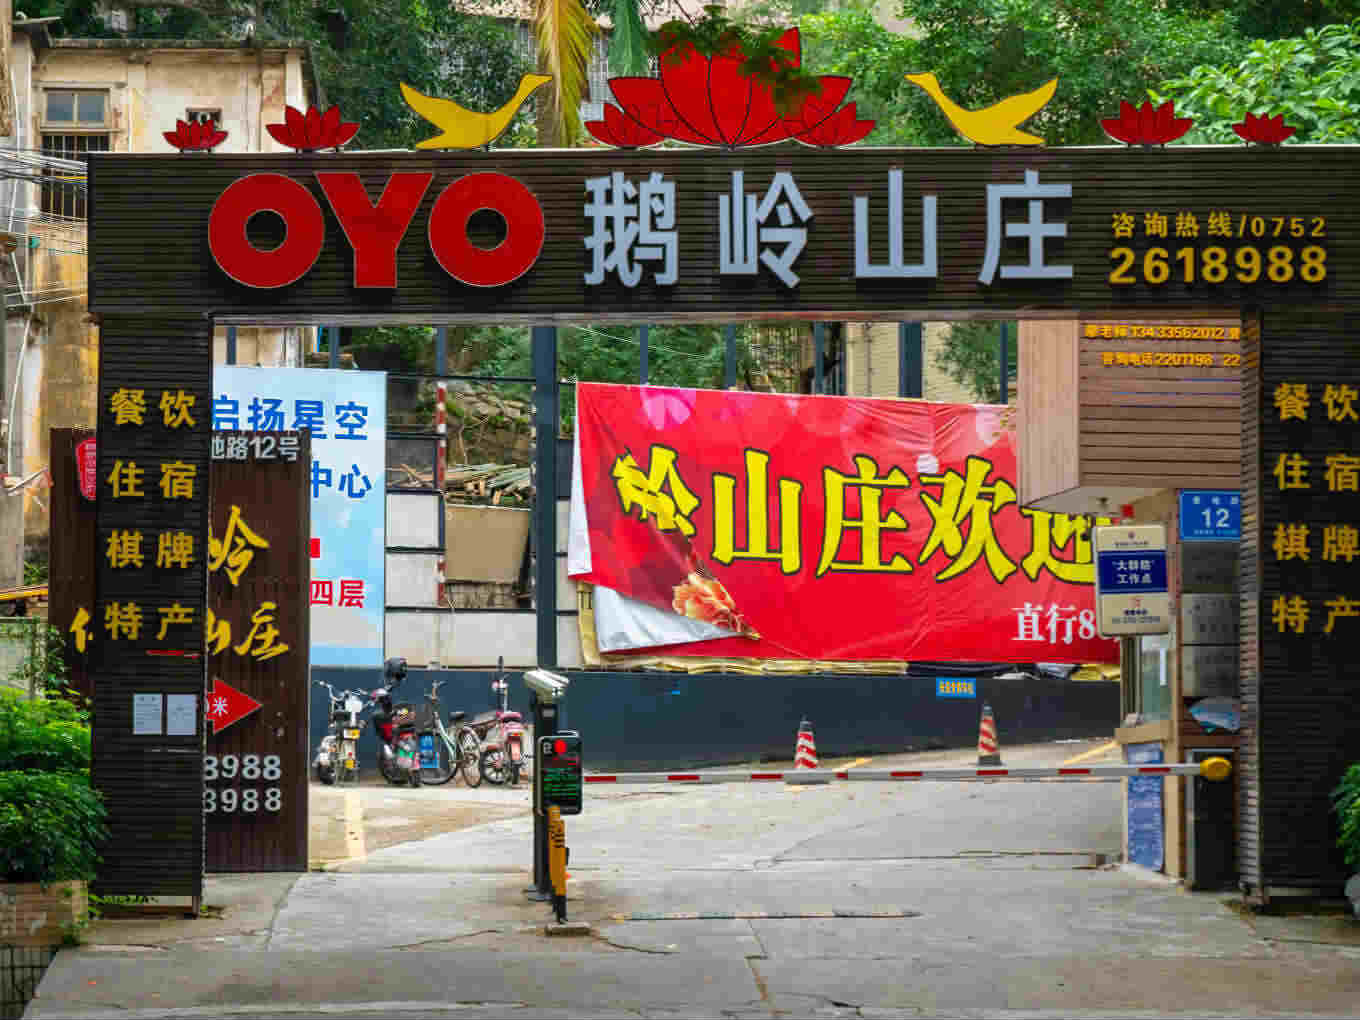 Amid Coronavirus Outbreak, 3000 OYO China Employees To Be Laid Off